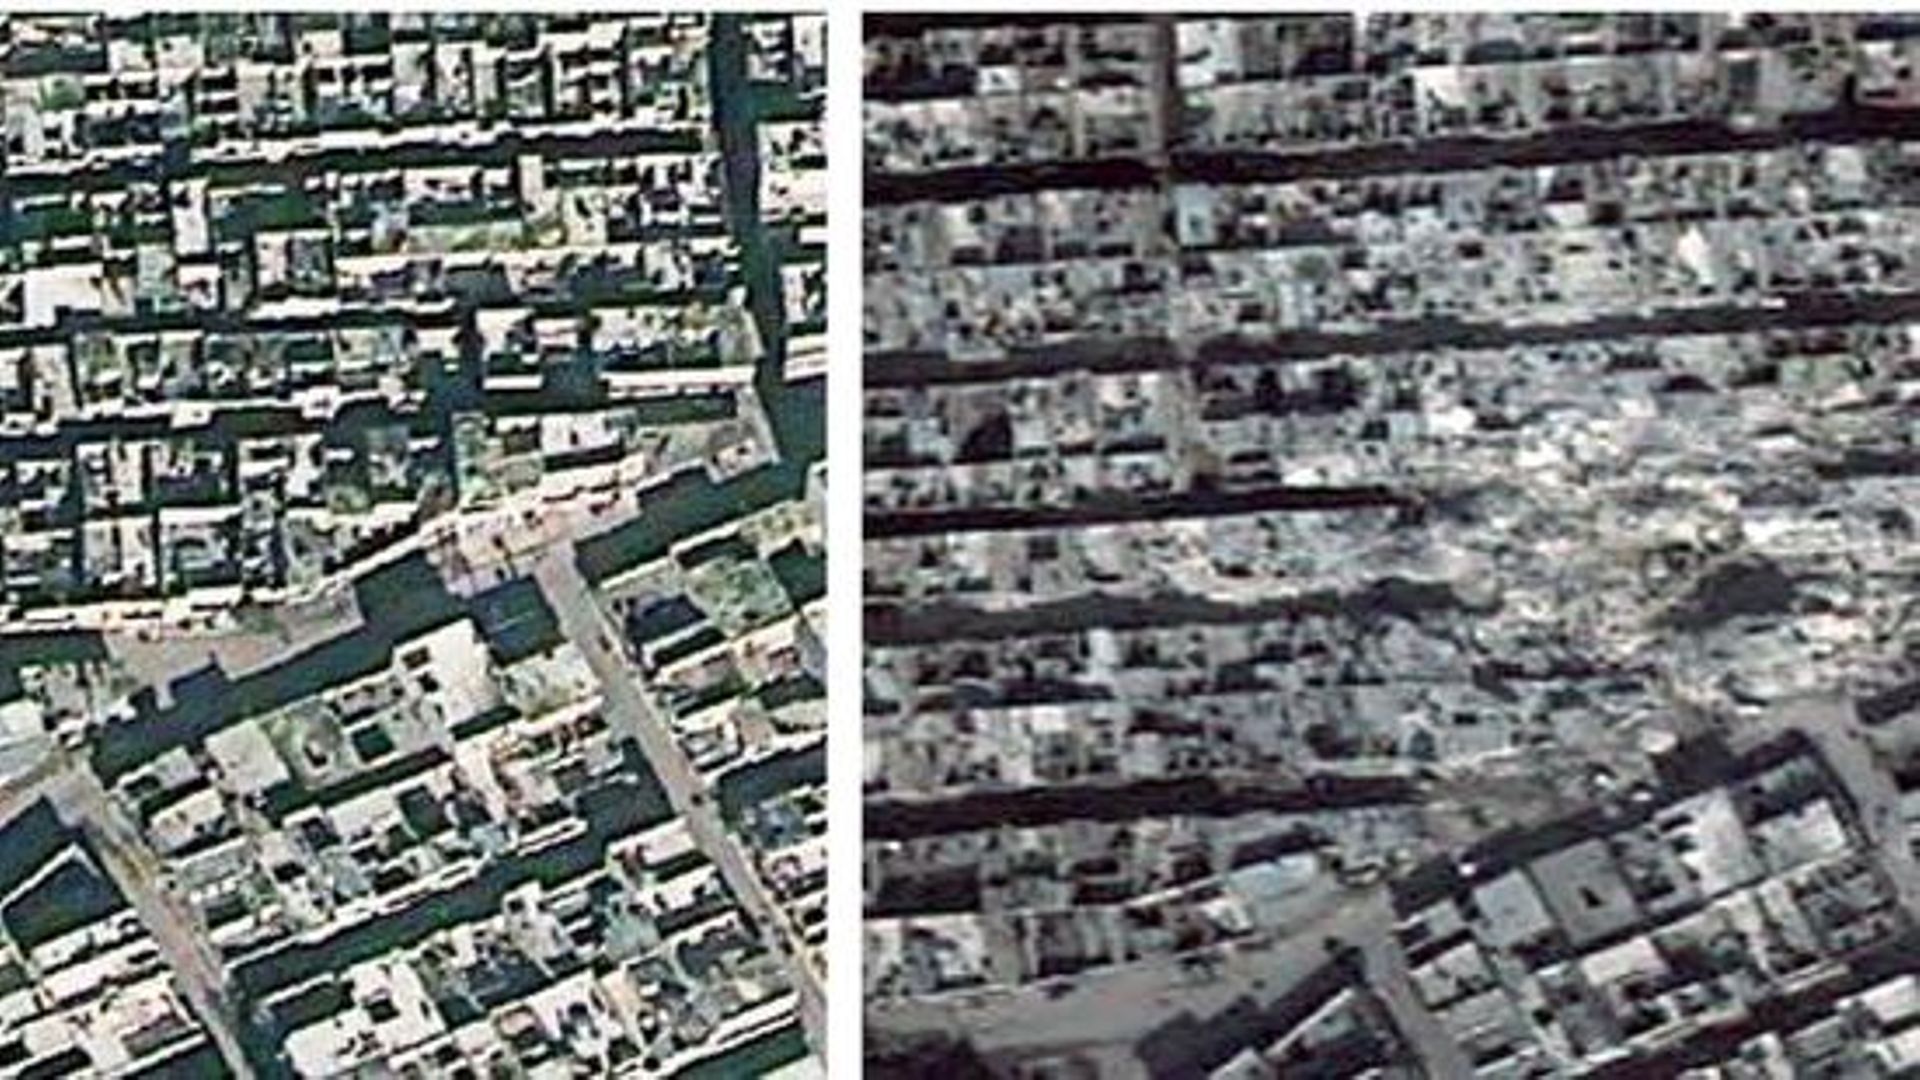 syrie-des-photos-satellites-montrent-alep-devastee-avant-et-apres